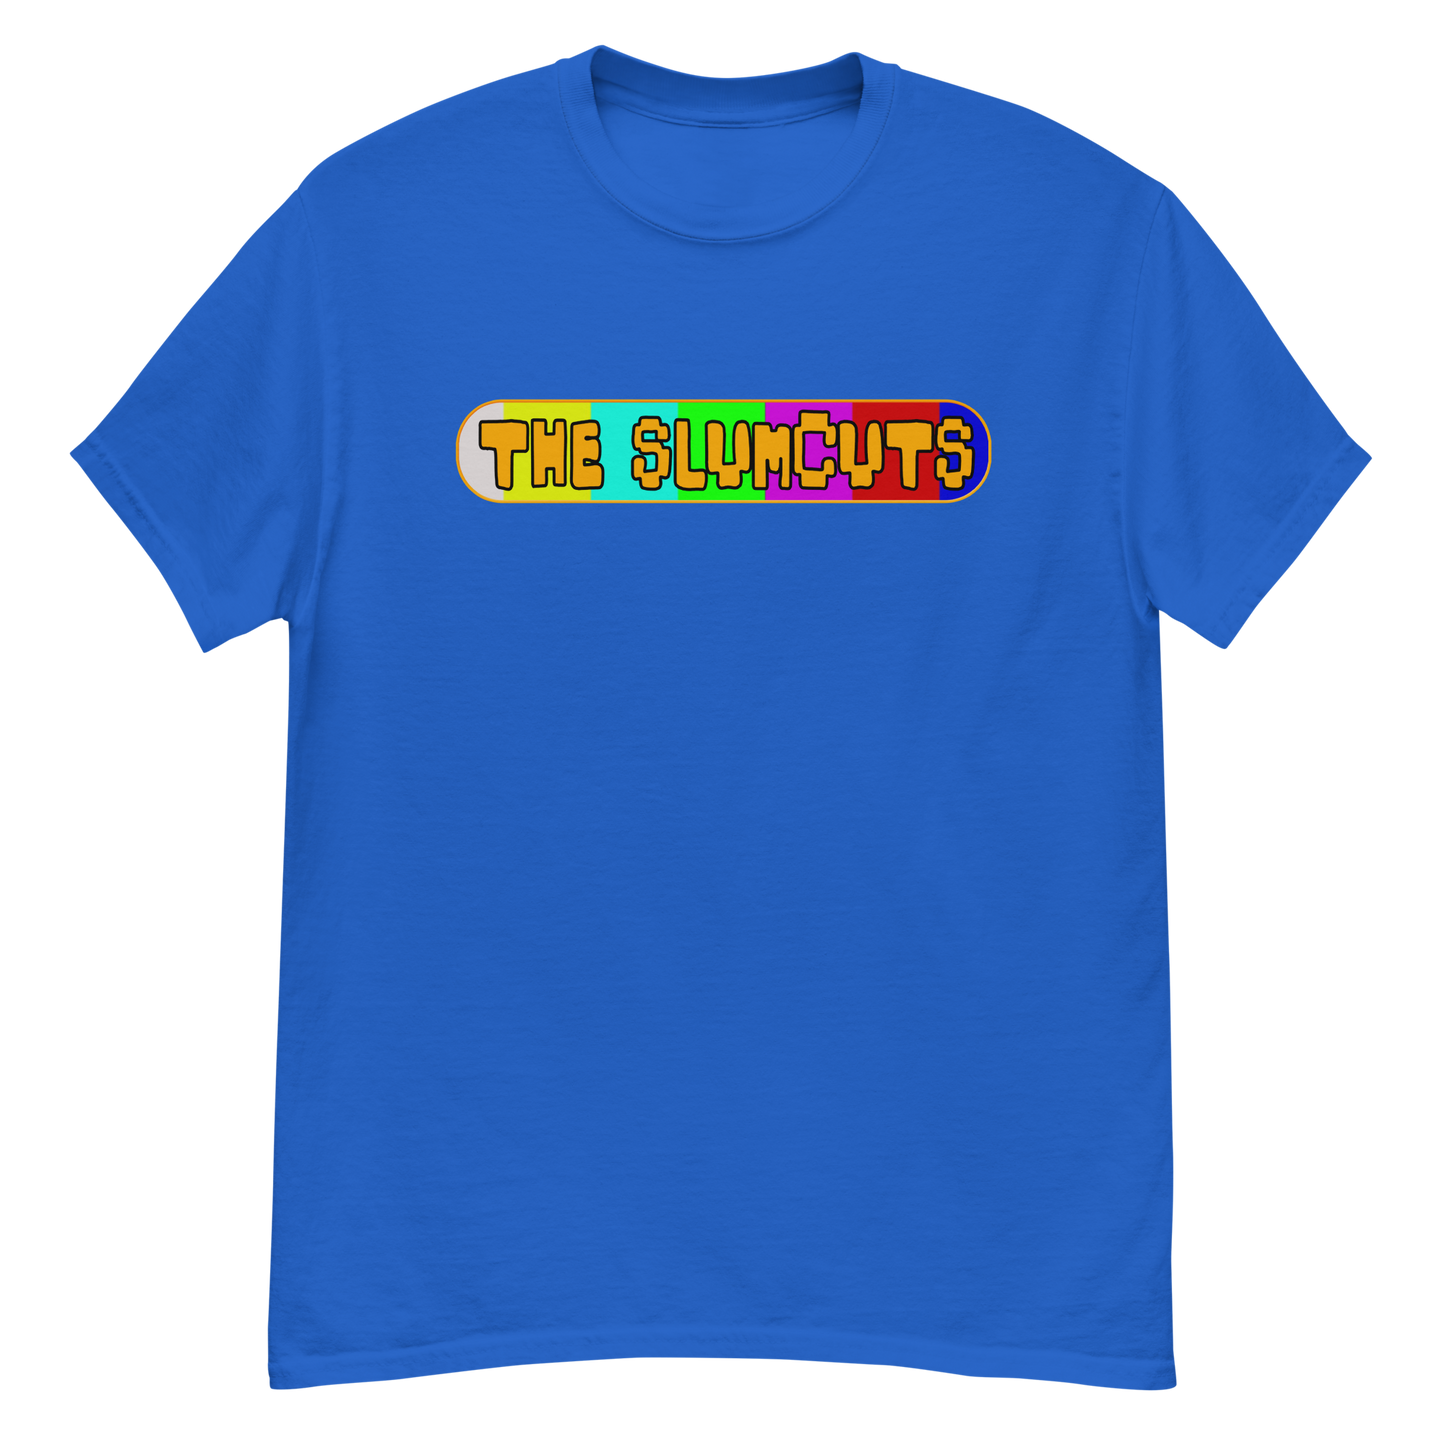 THE SLUMCUTS (shirt)